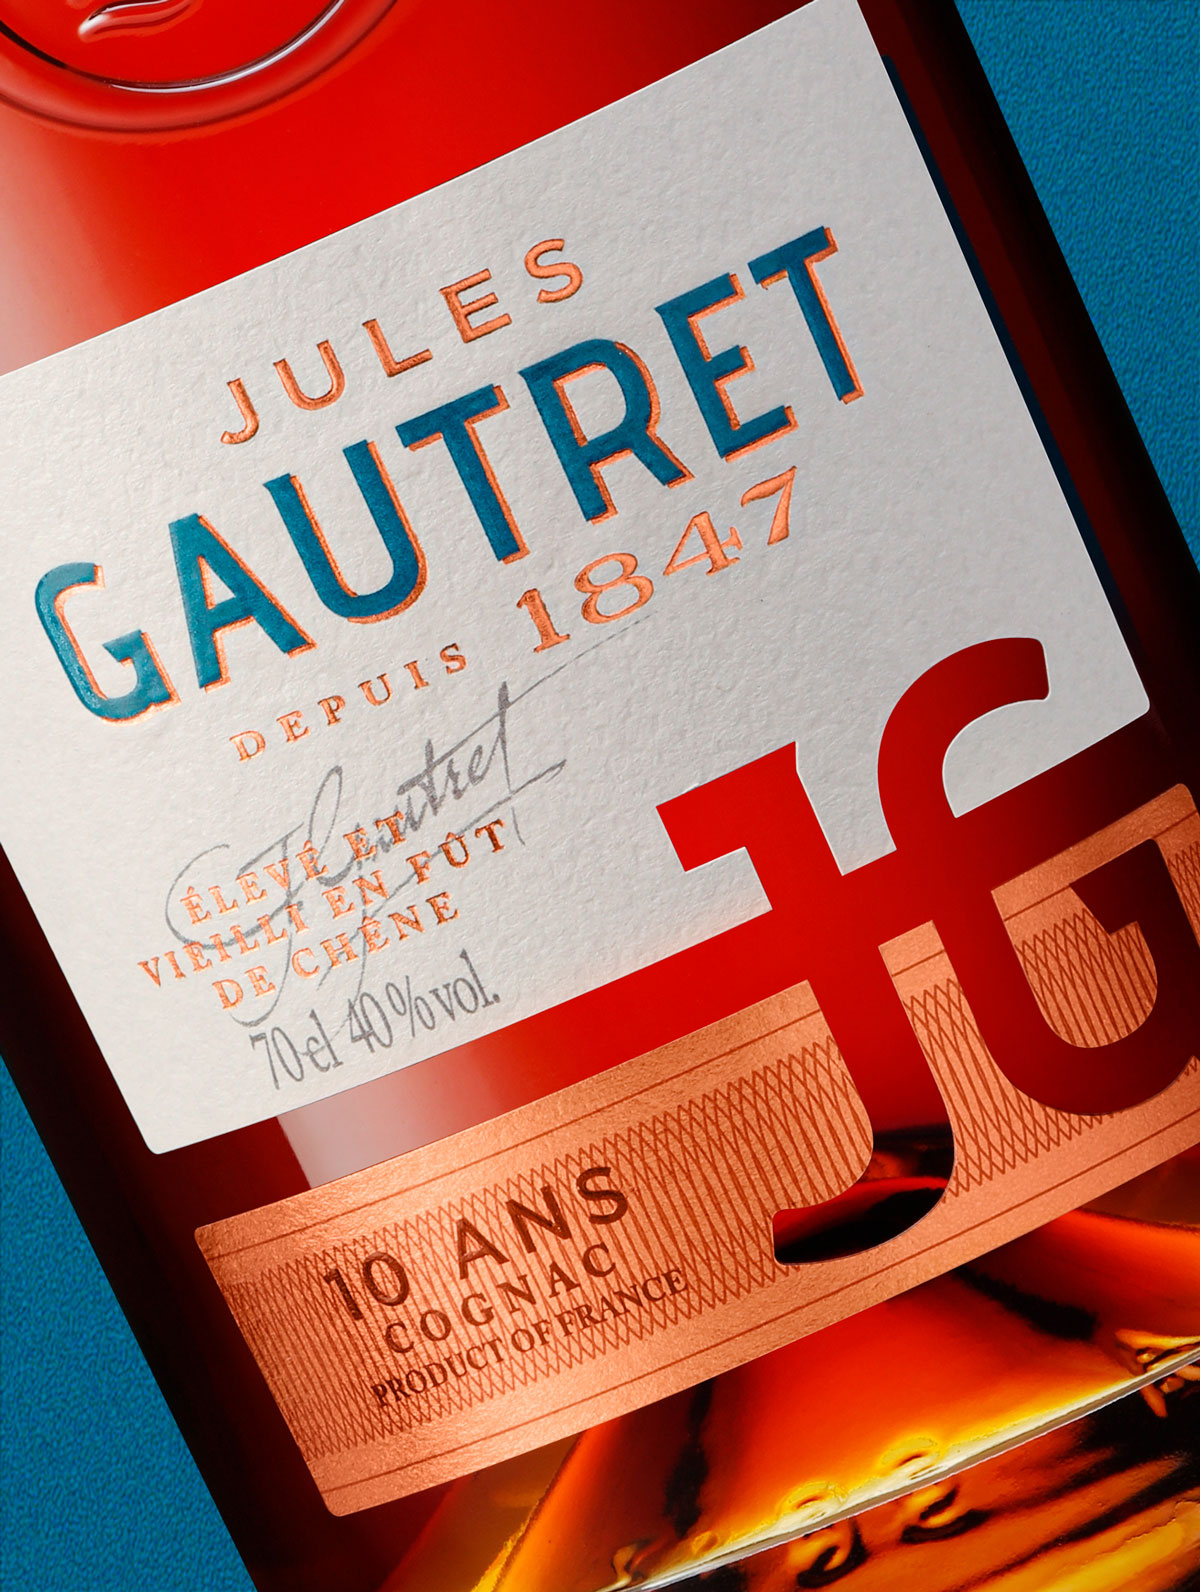 Maison Linea Relift Jules Gautret Cognac Society - Design Range Brand World